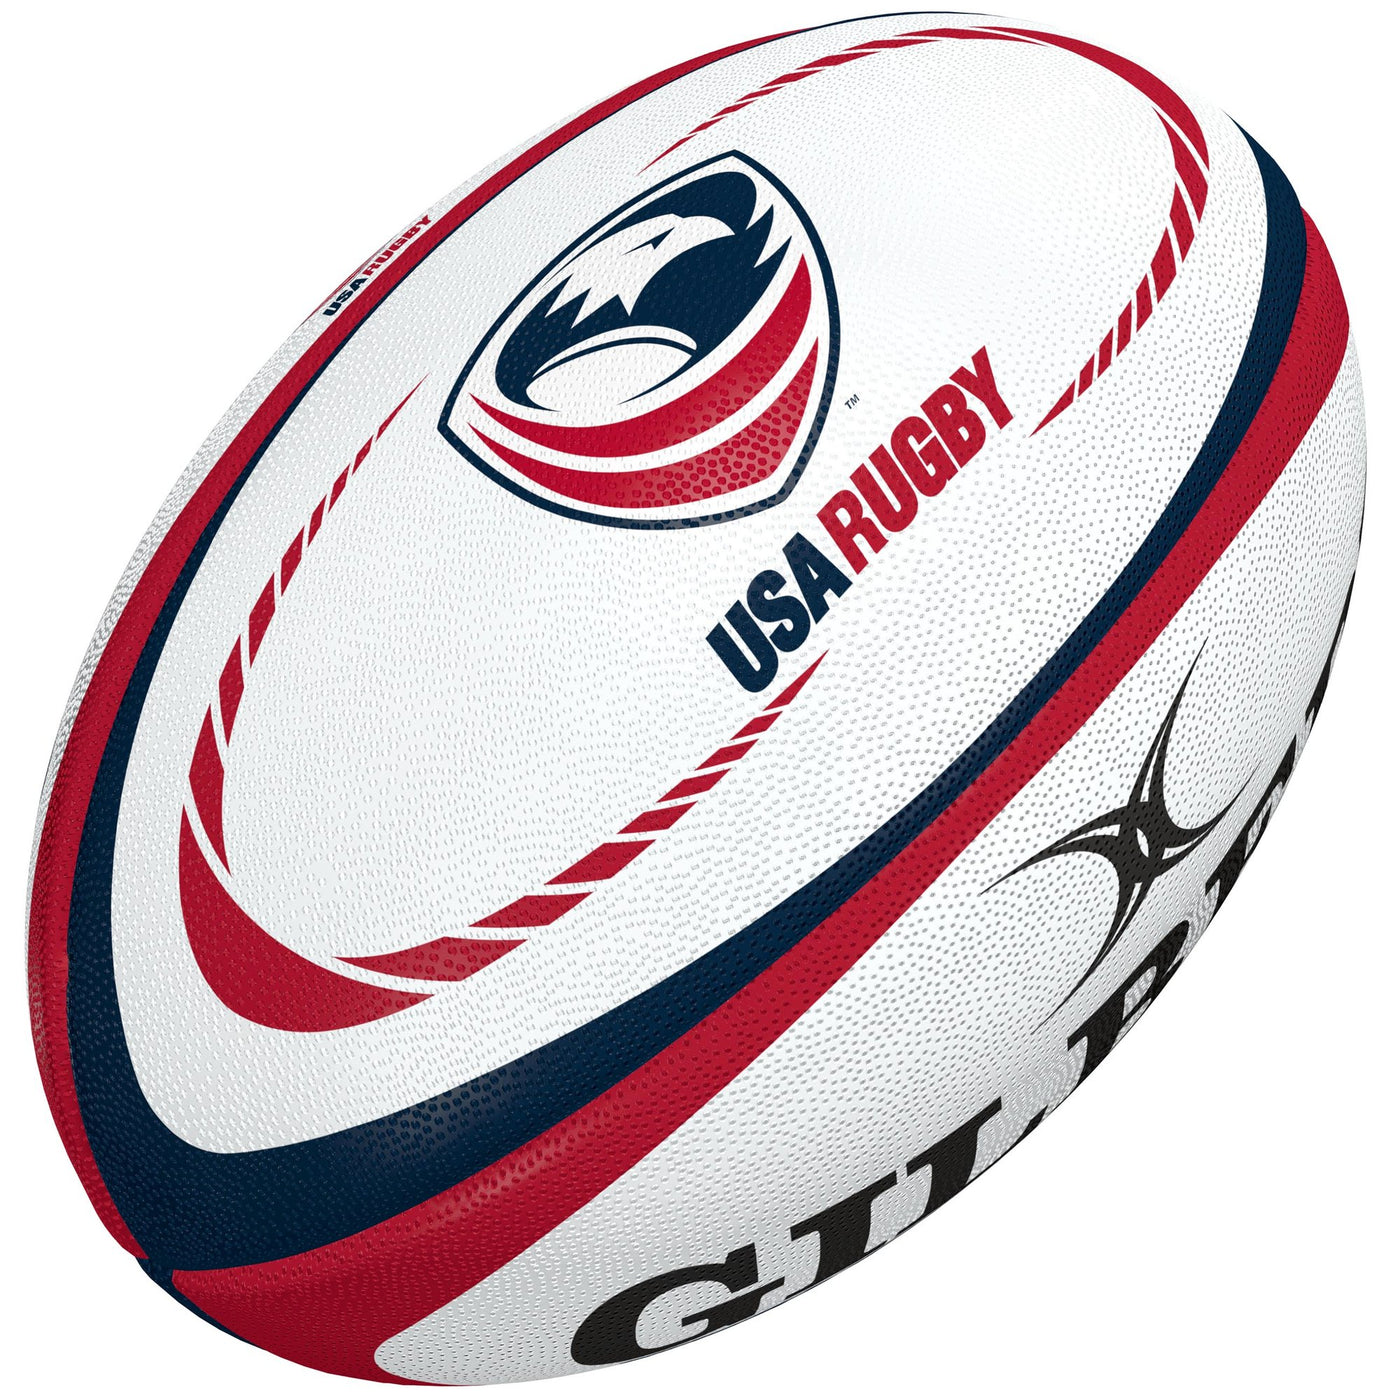 USA Replica Rugby Ball